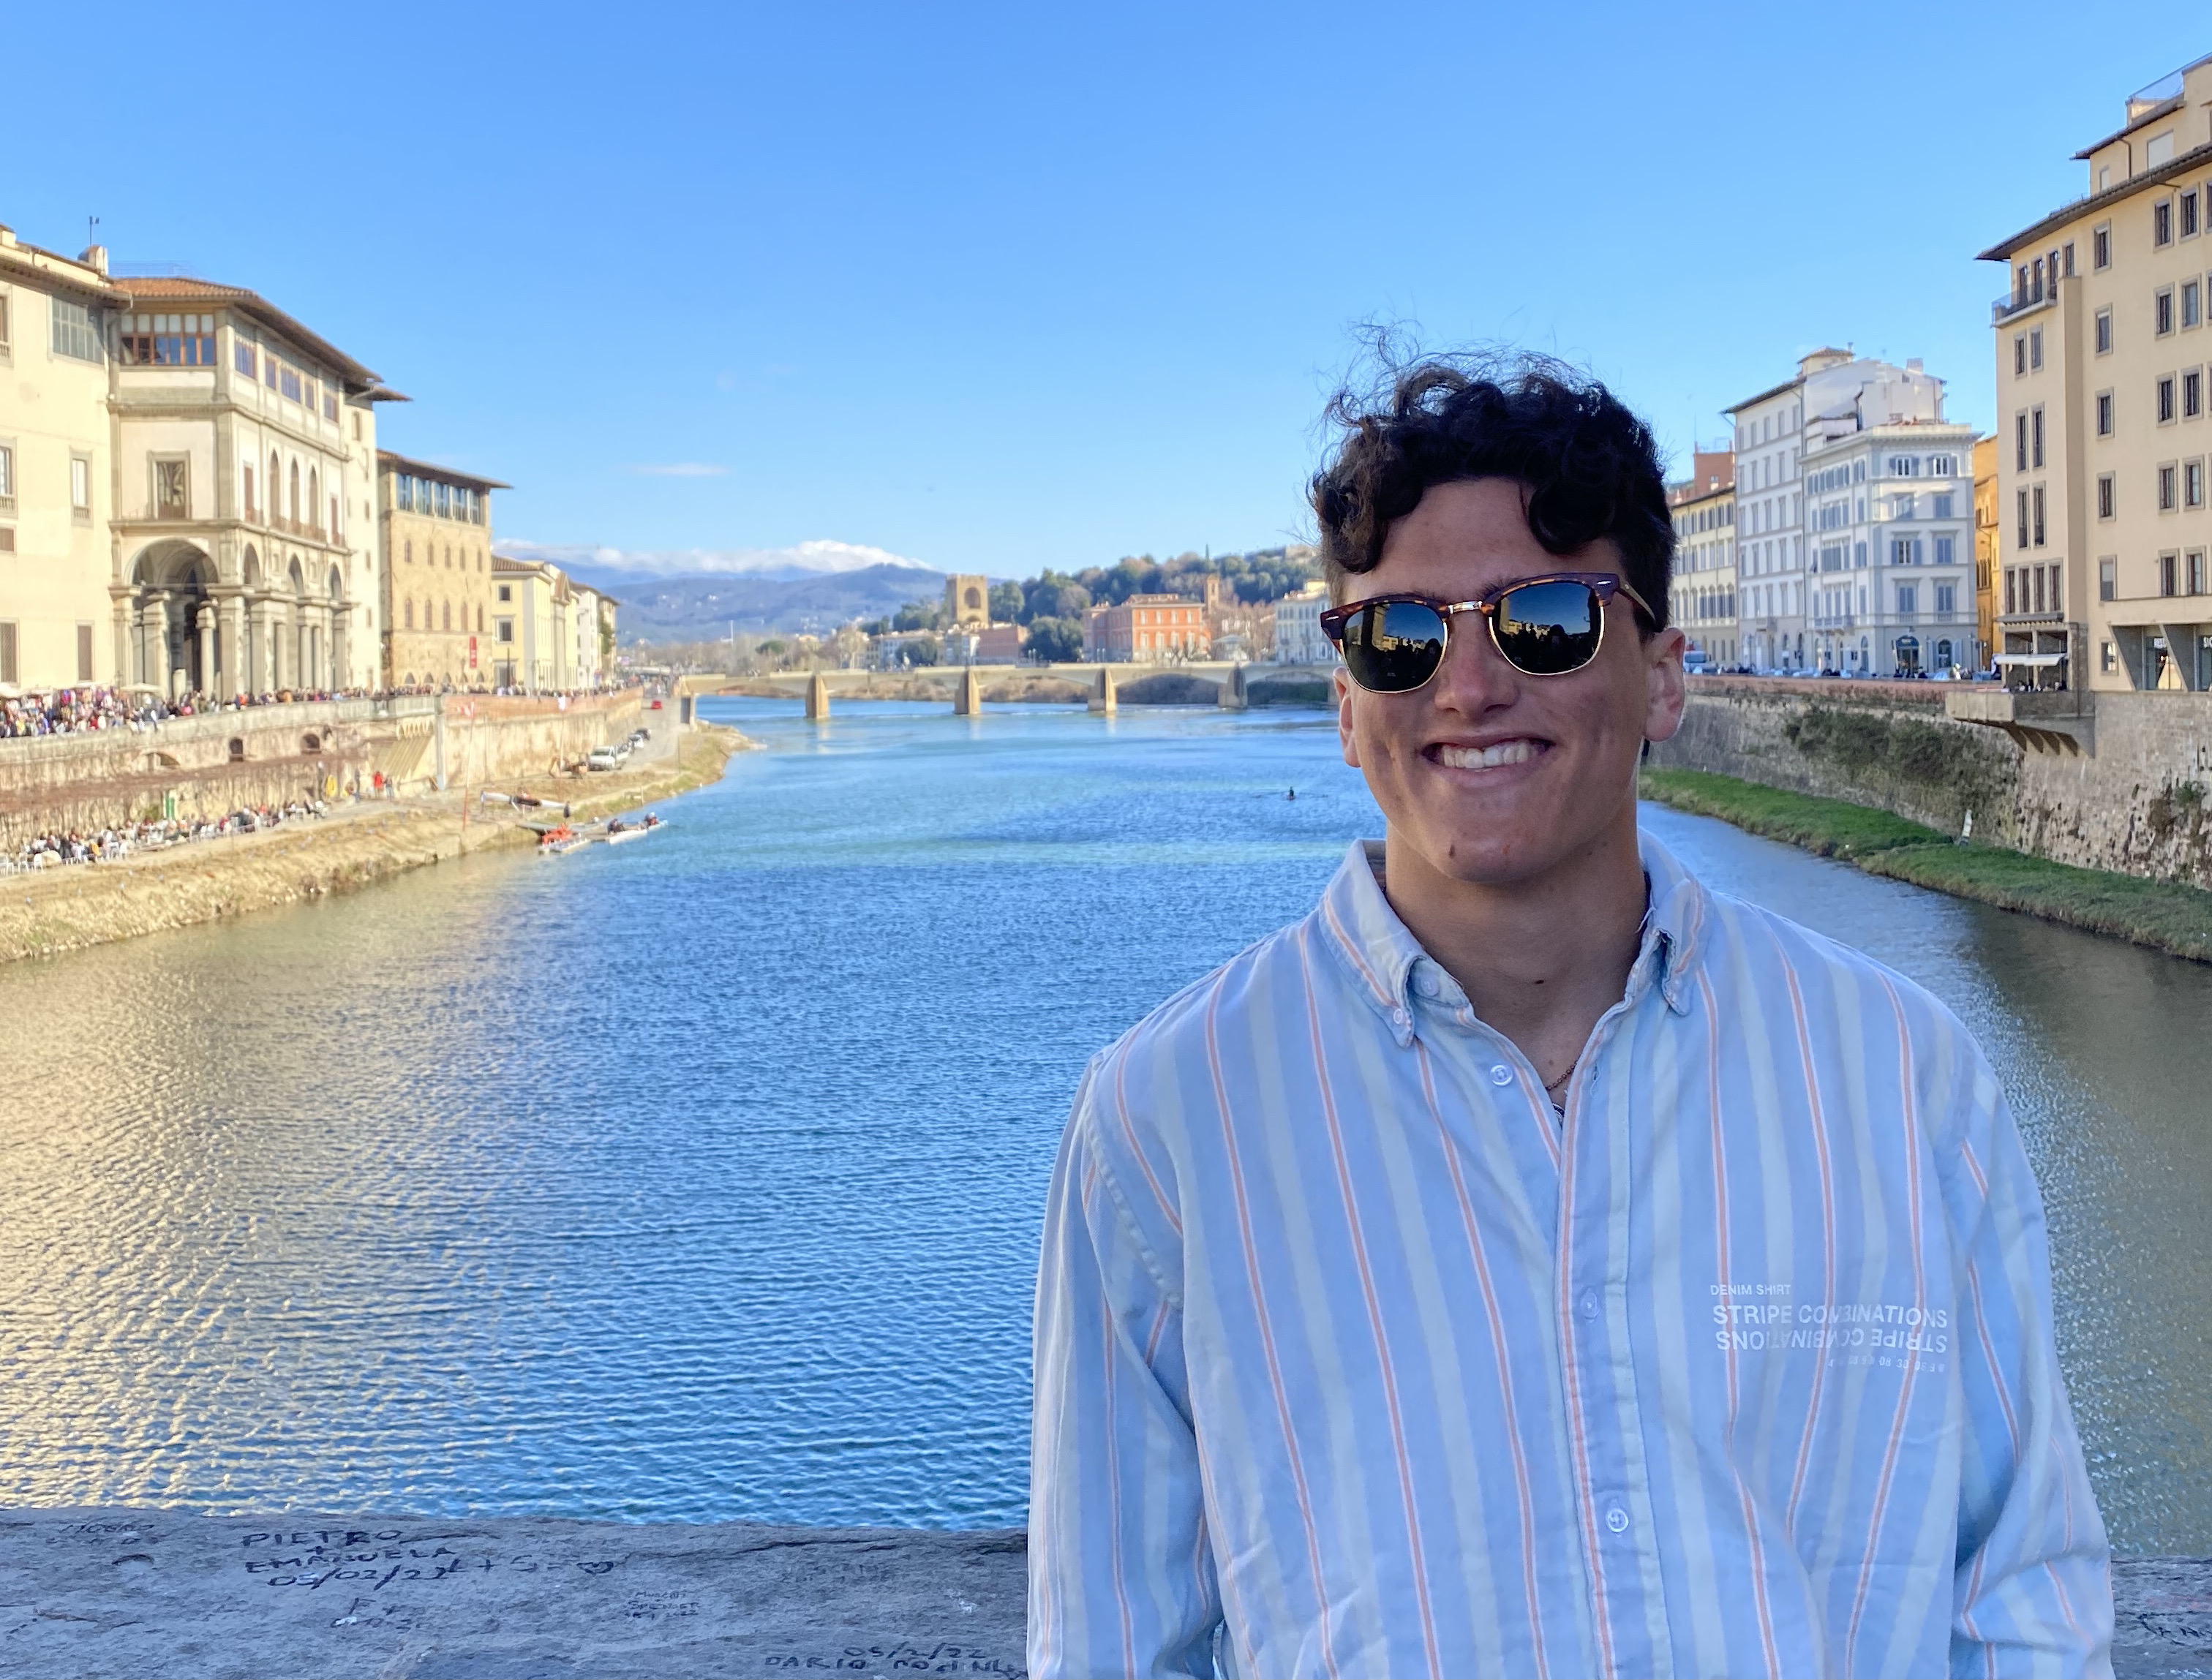 Ponte Vecchi in Florence